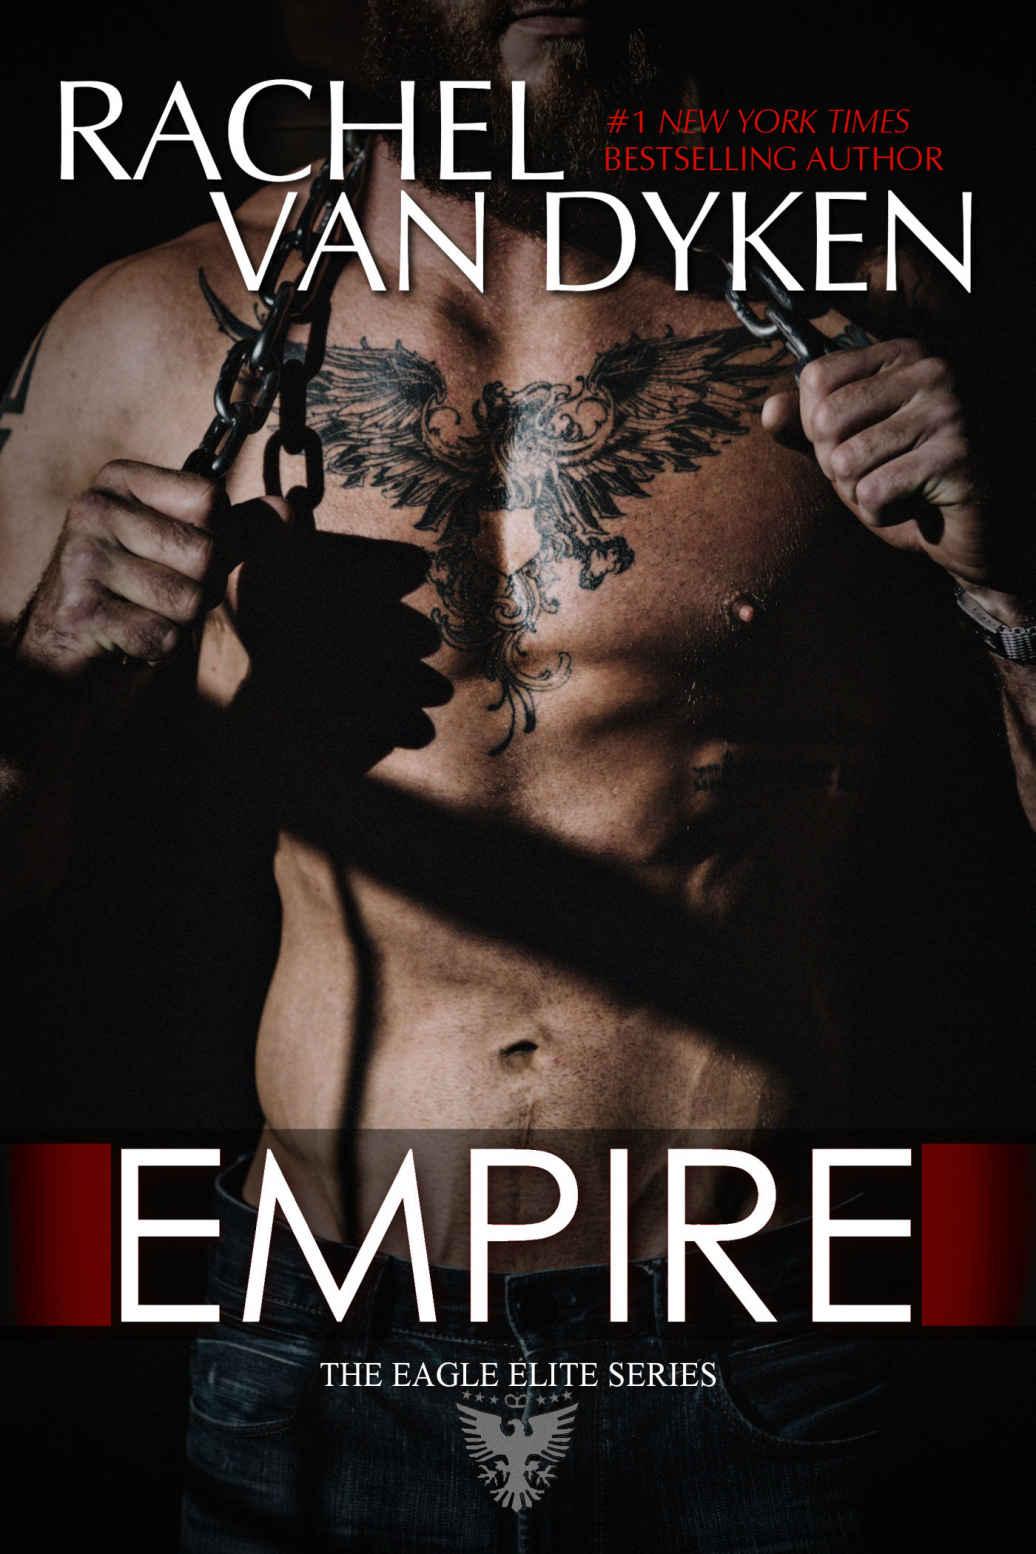 Empire (Eagle Elite Book 7) by Rachel Van Dyken